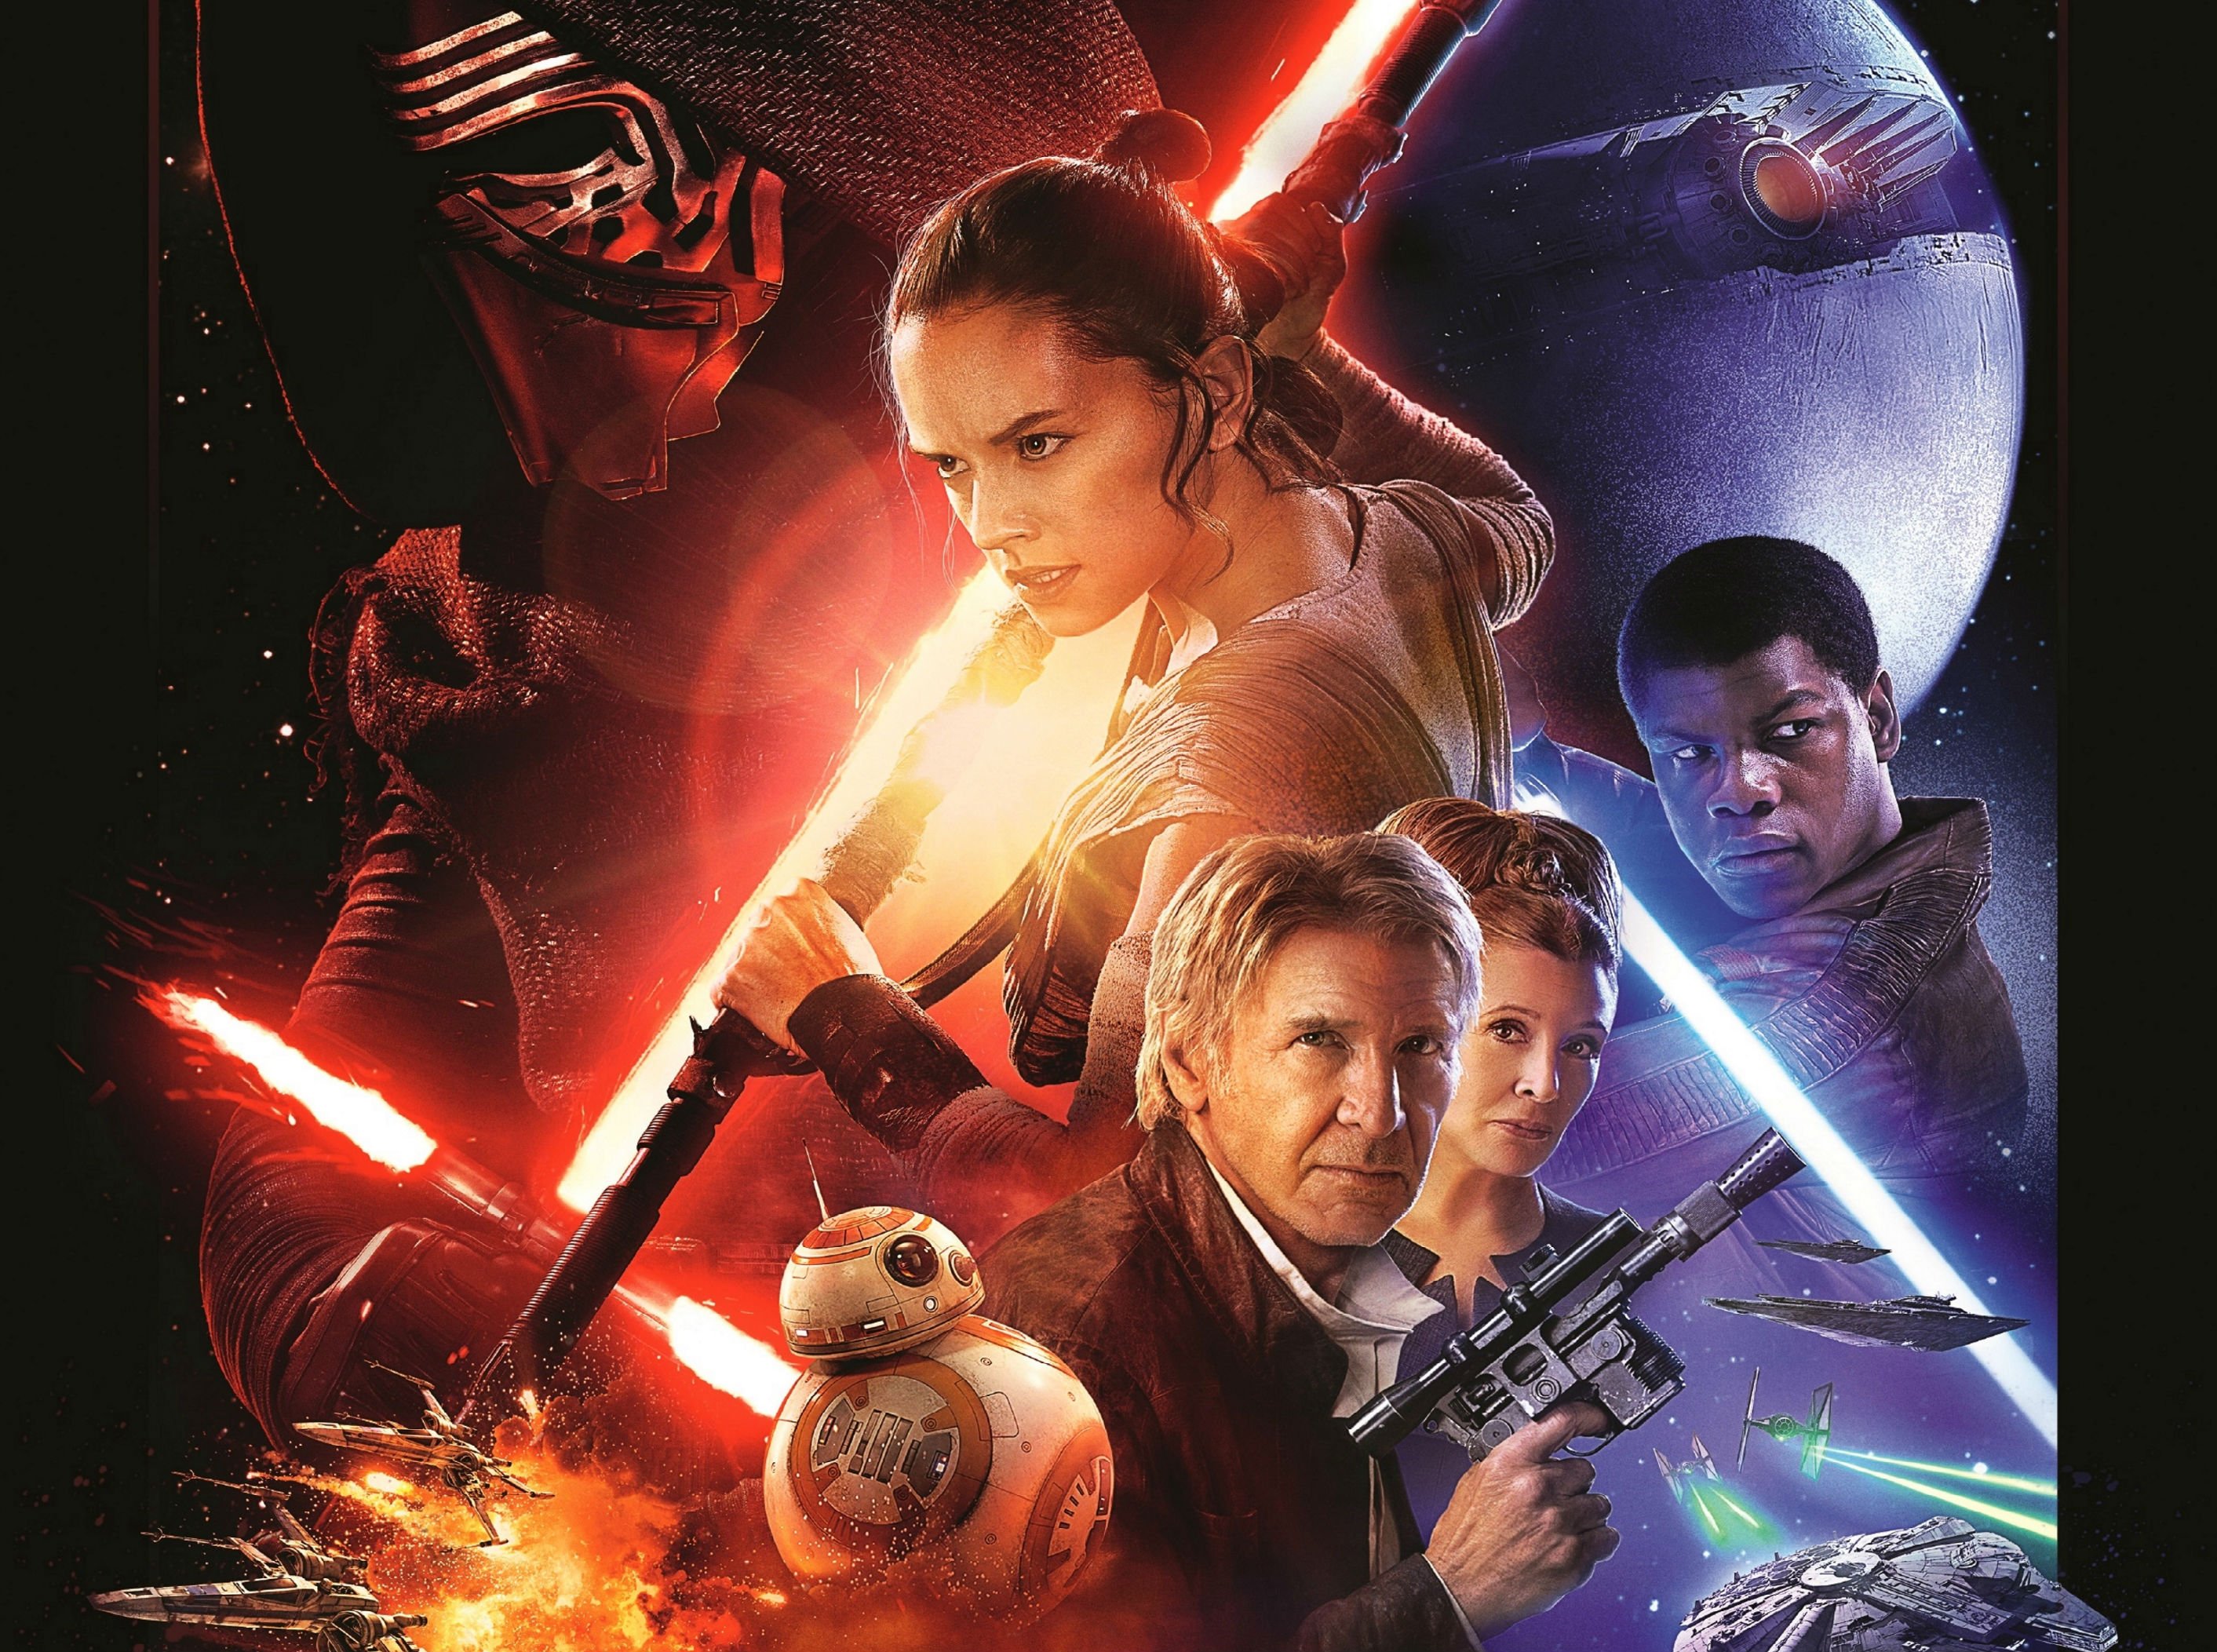 star wars the force awakens full movie hd free